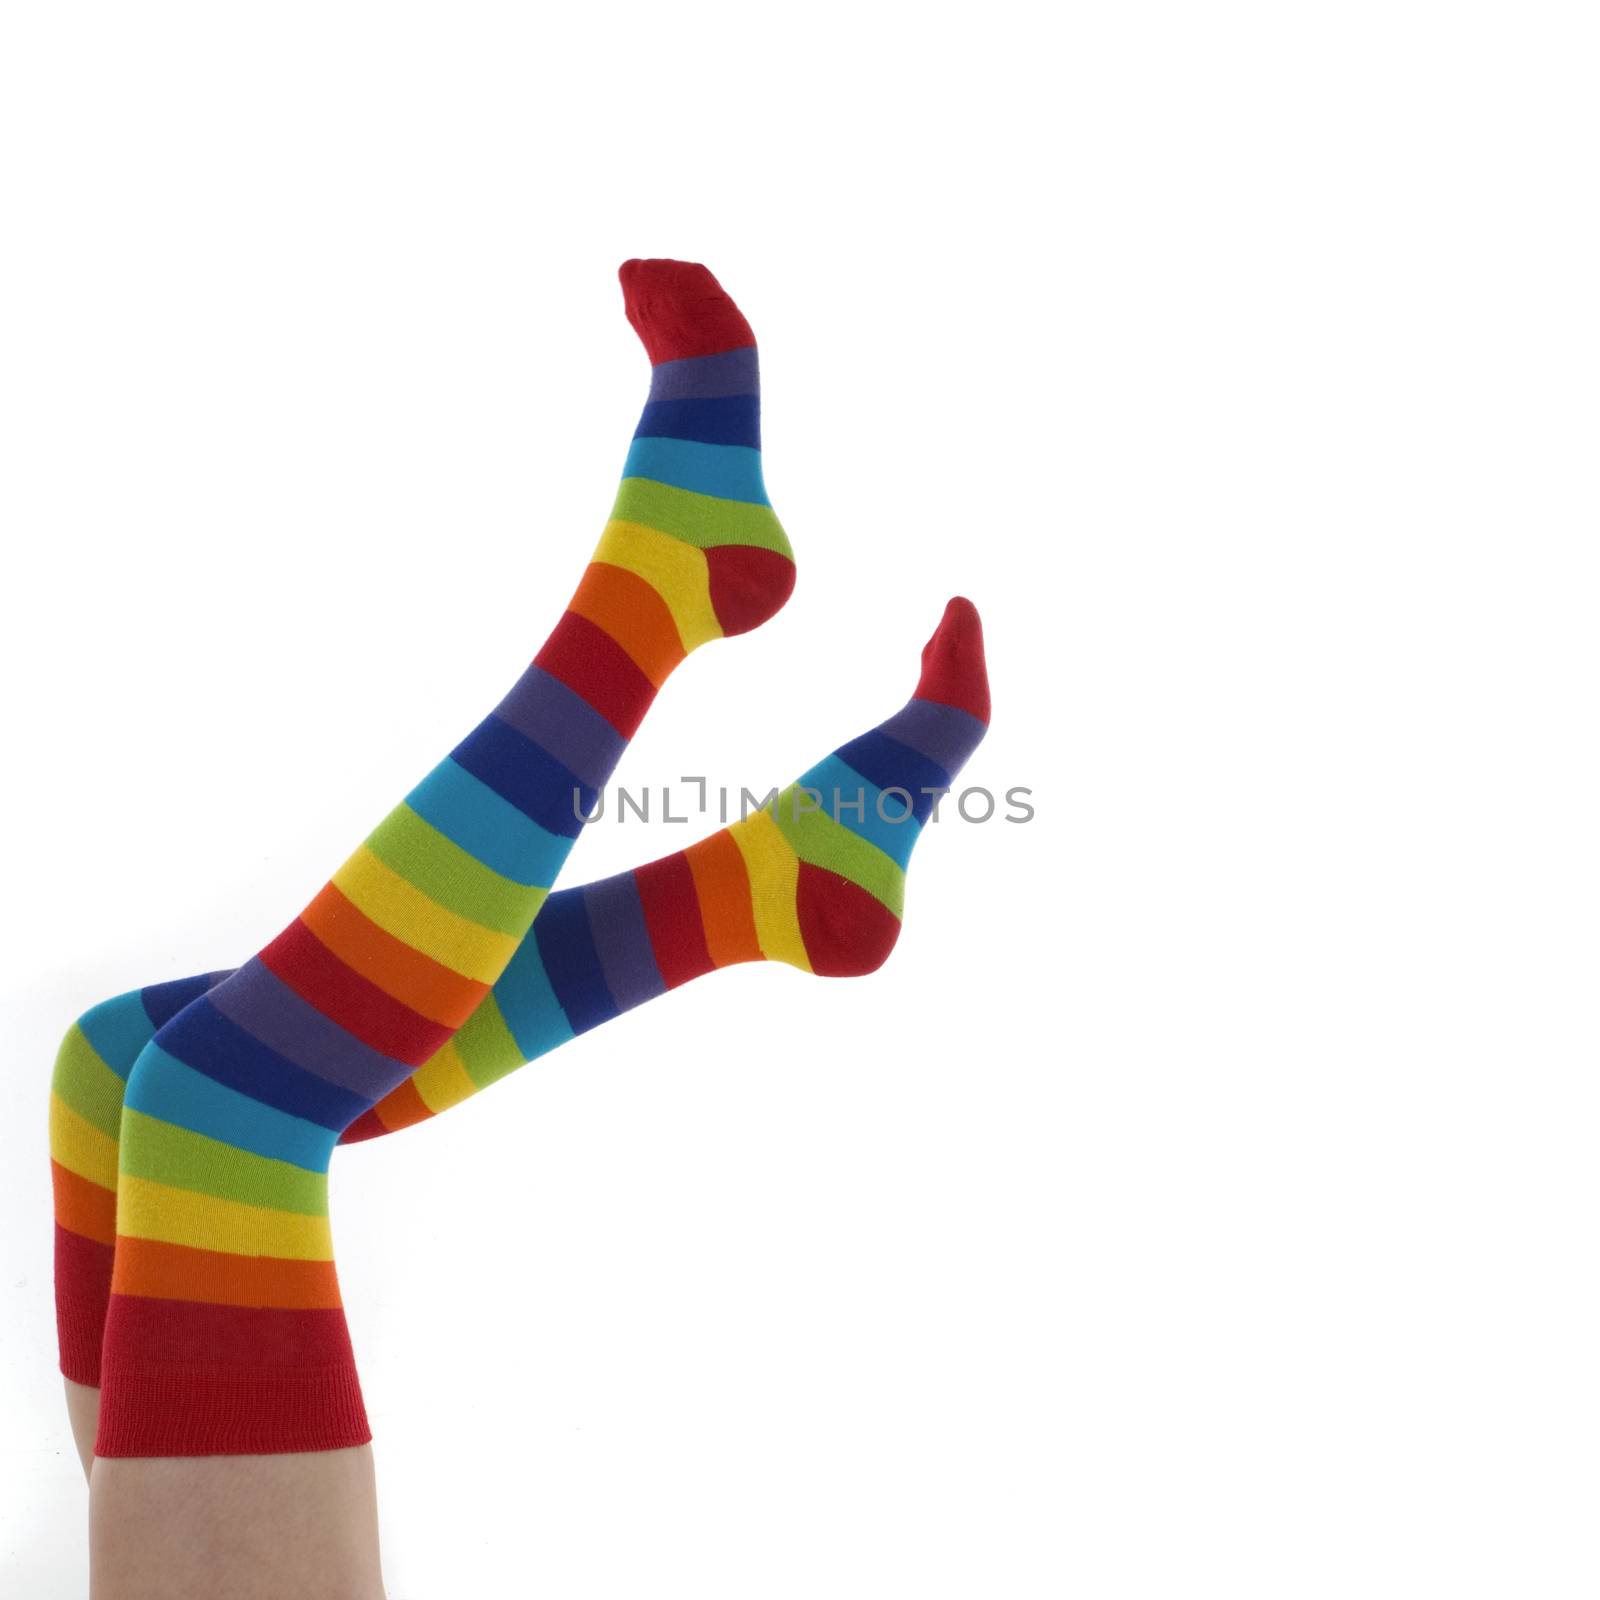 A pair of female legs clad in stripy rainbow socks